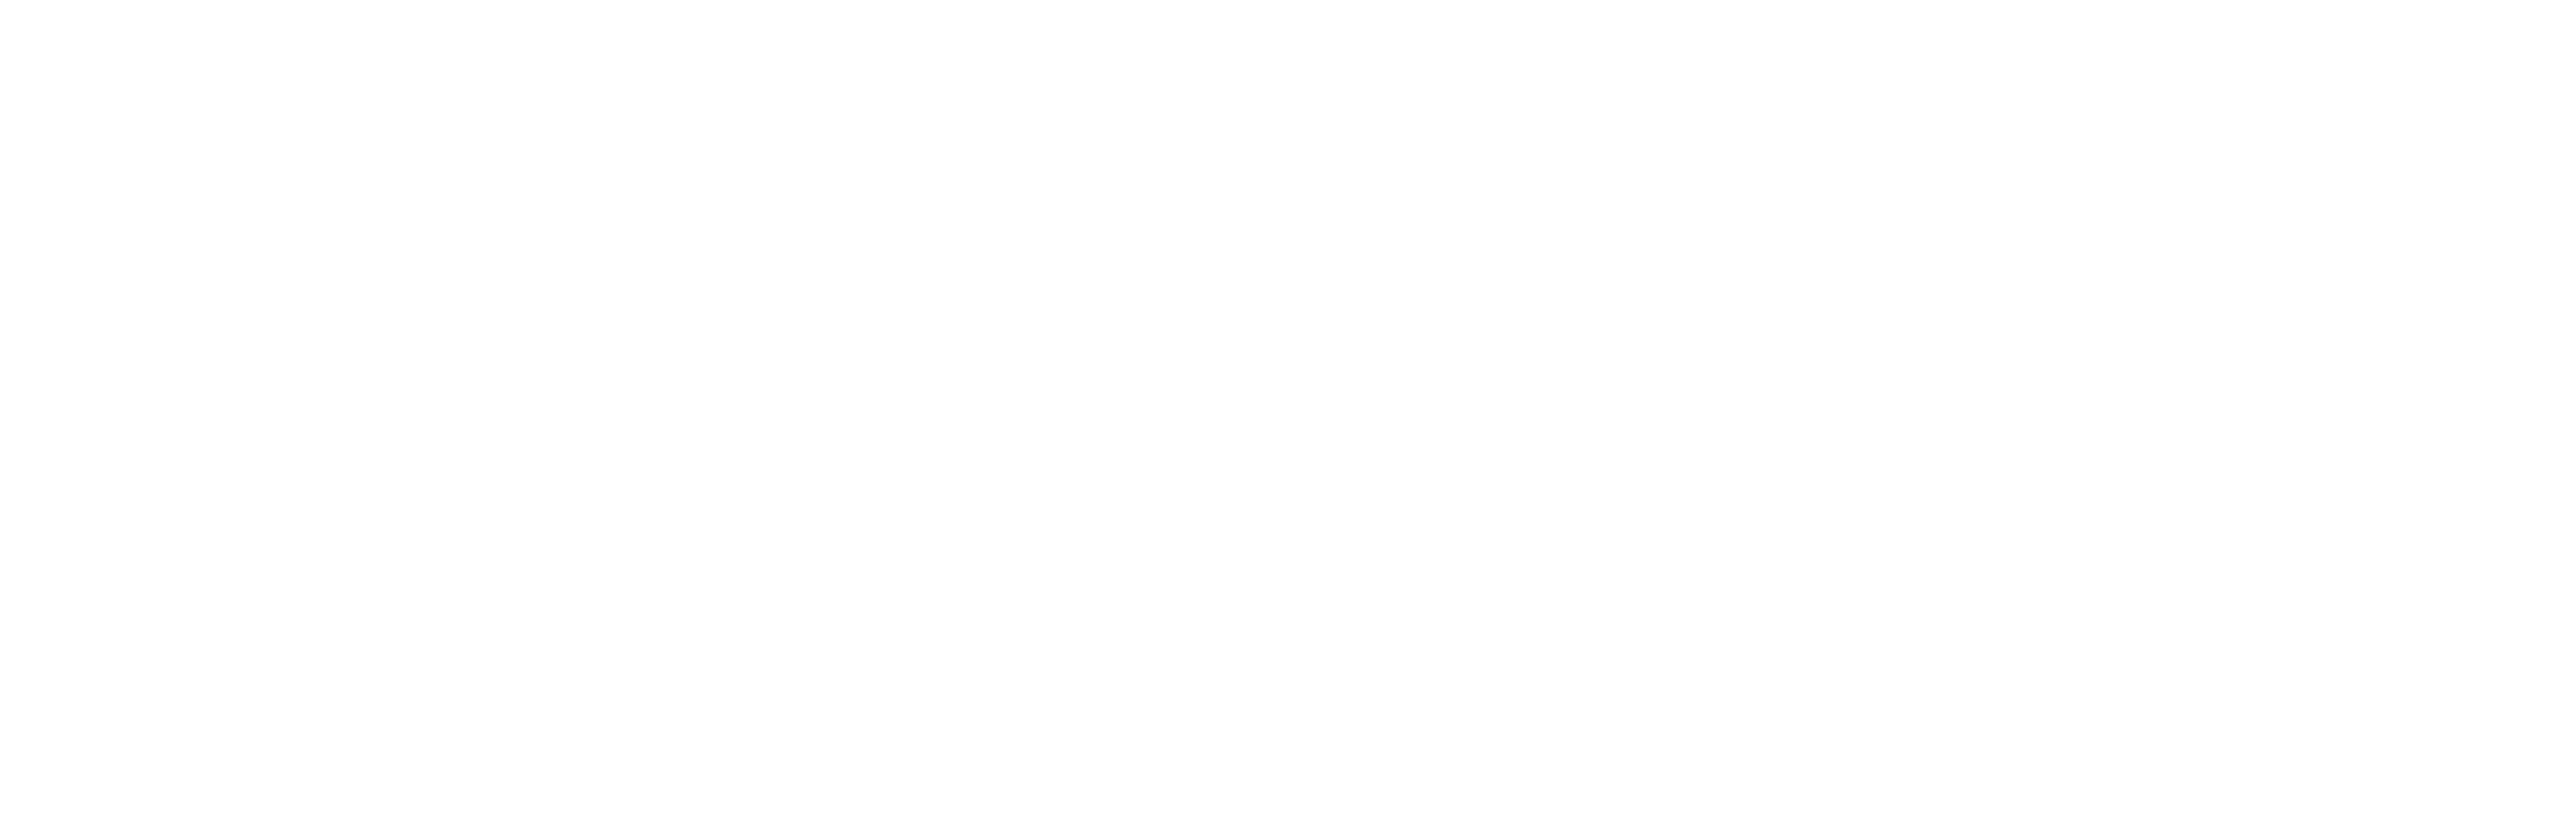 Animal Karma logo